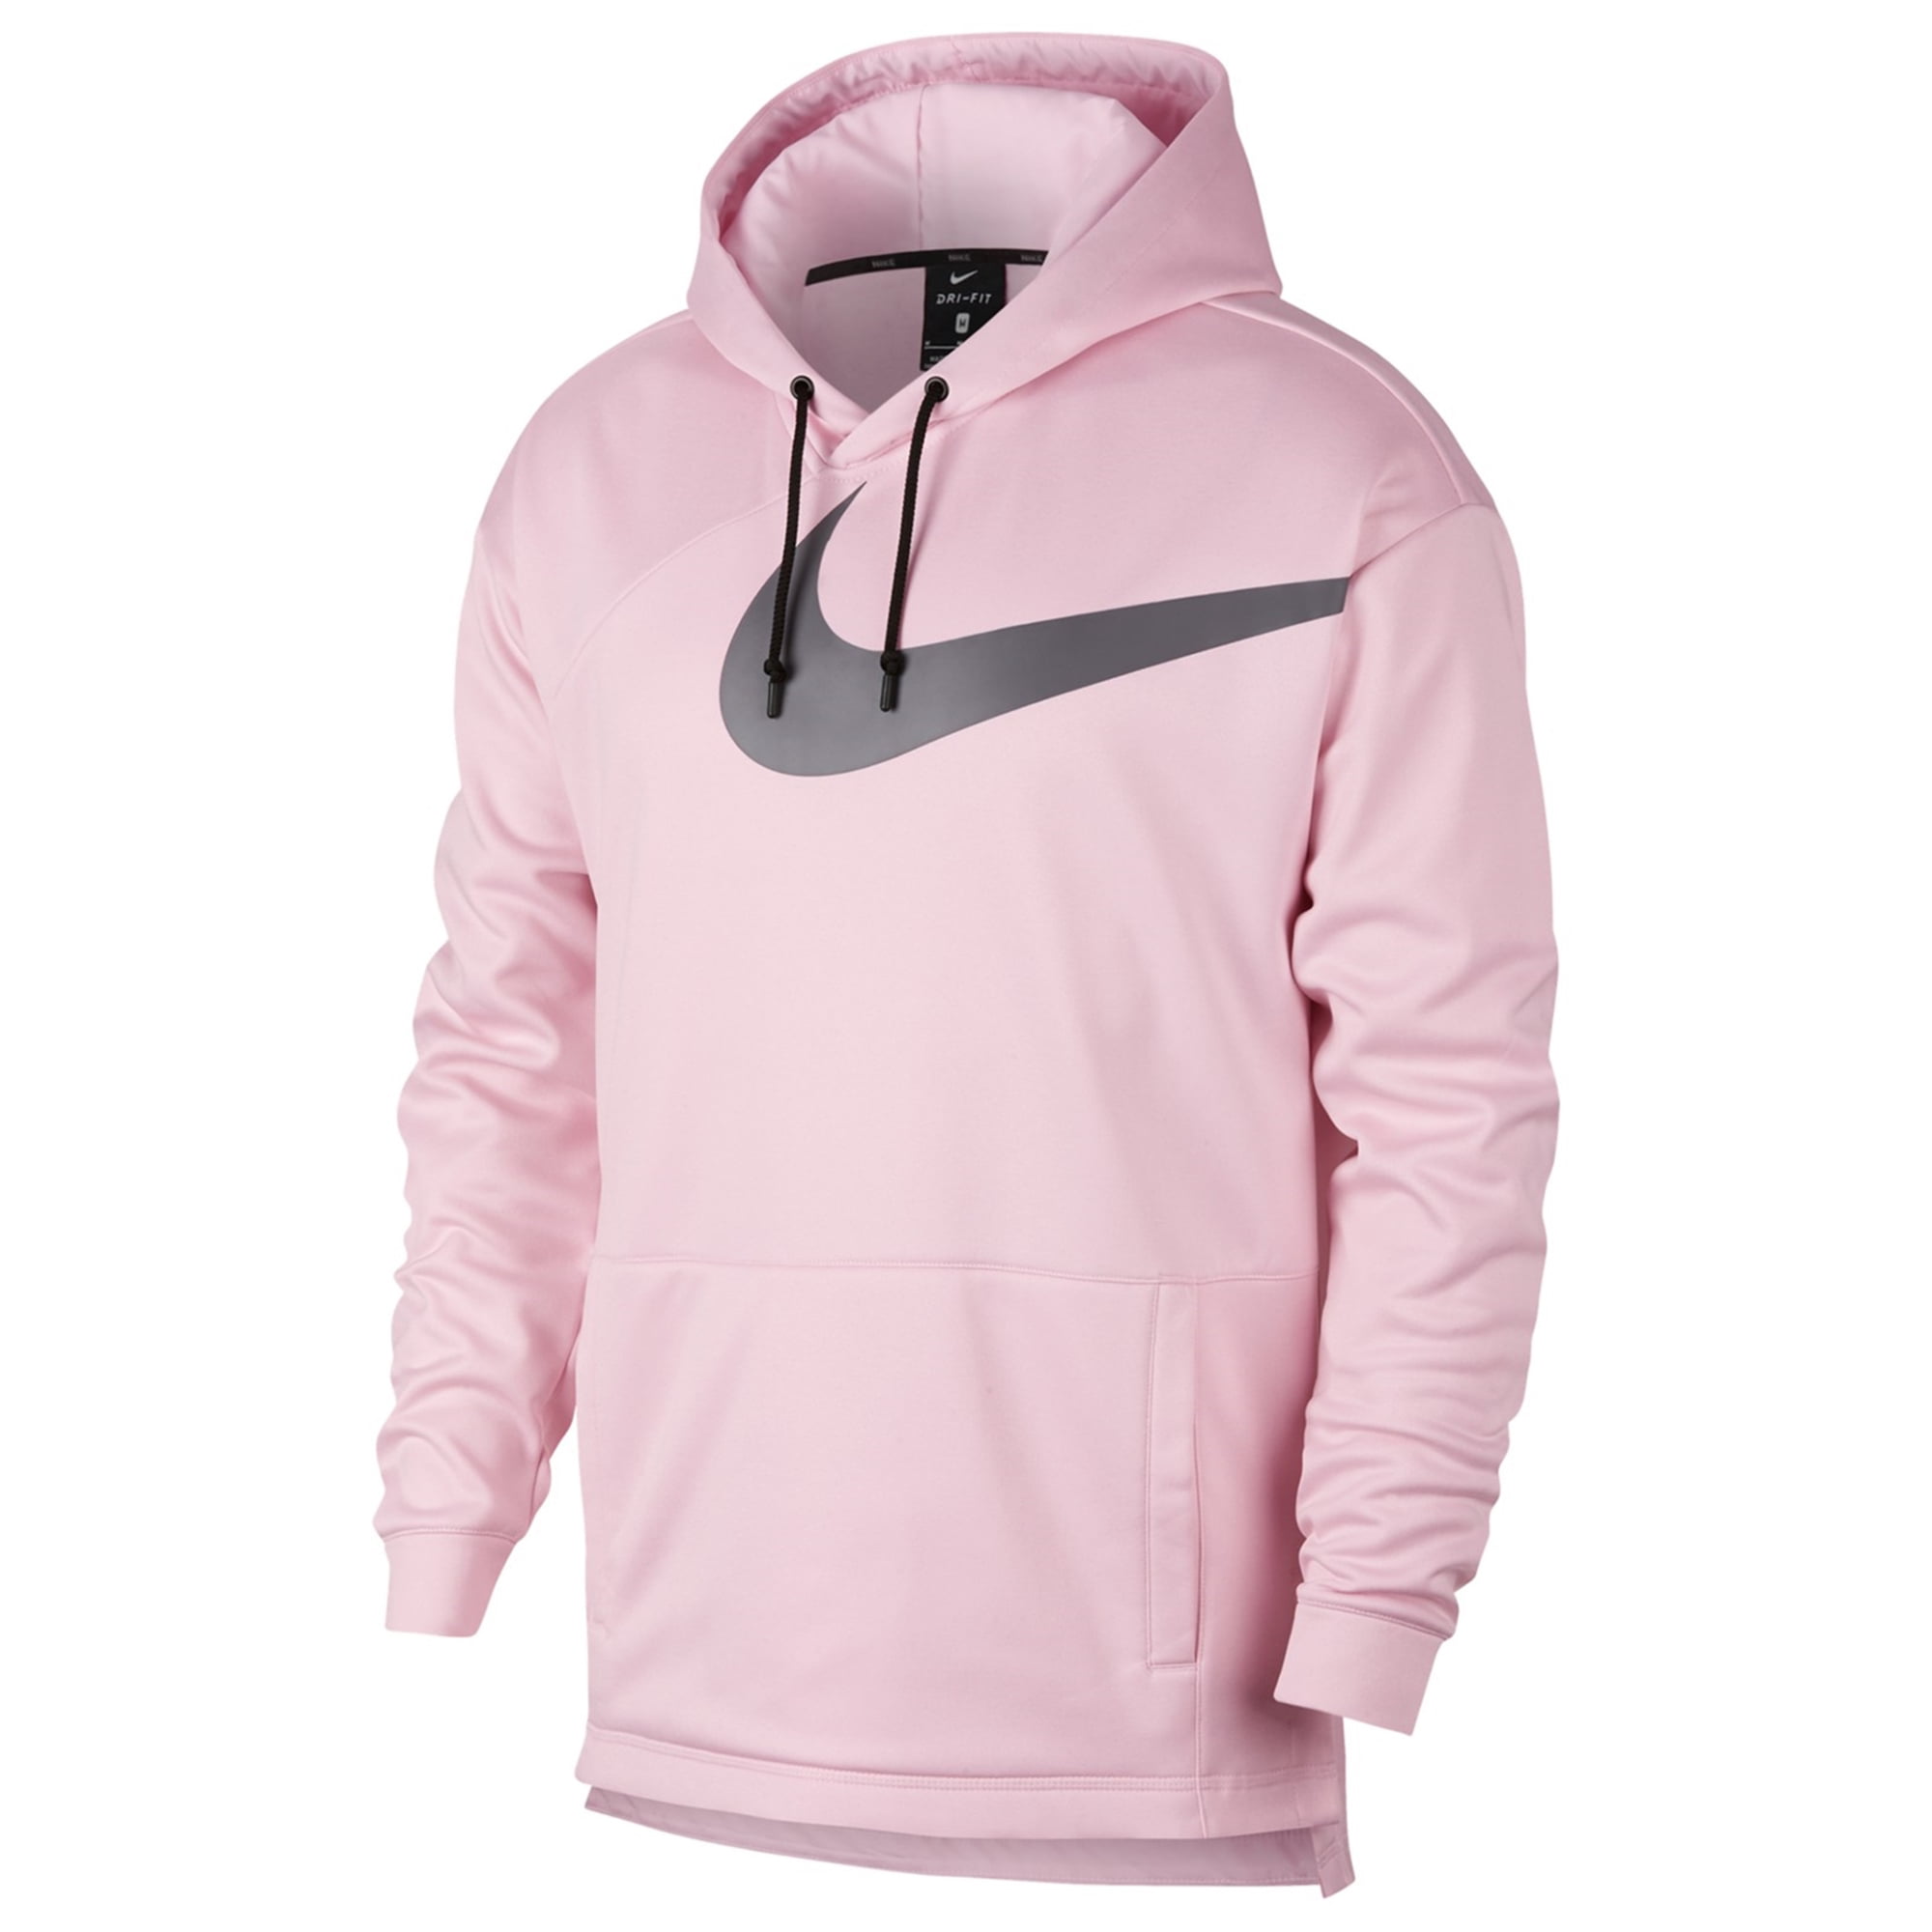 Nike - Nike Mens Therma-Fit Hoodie Sweatshirt - Walmart.com - Walmart.com